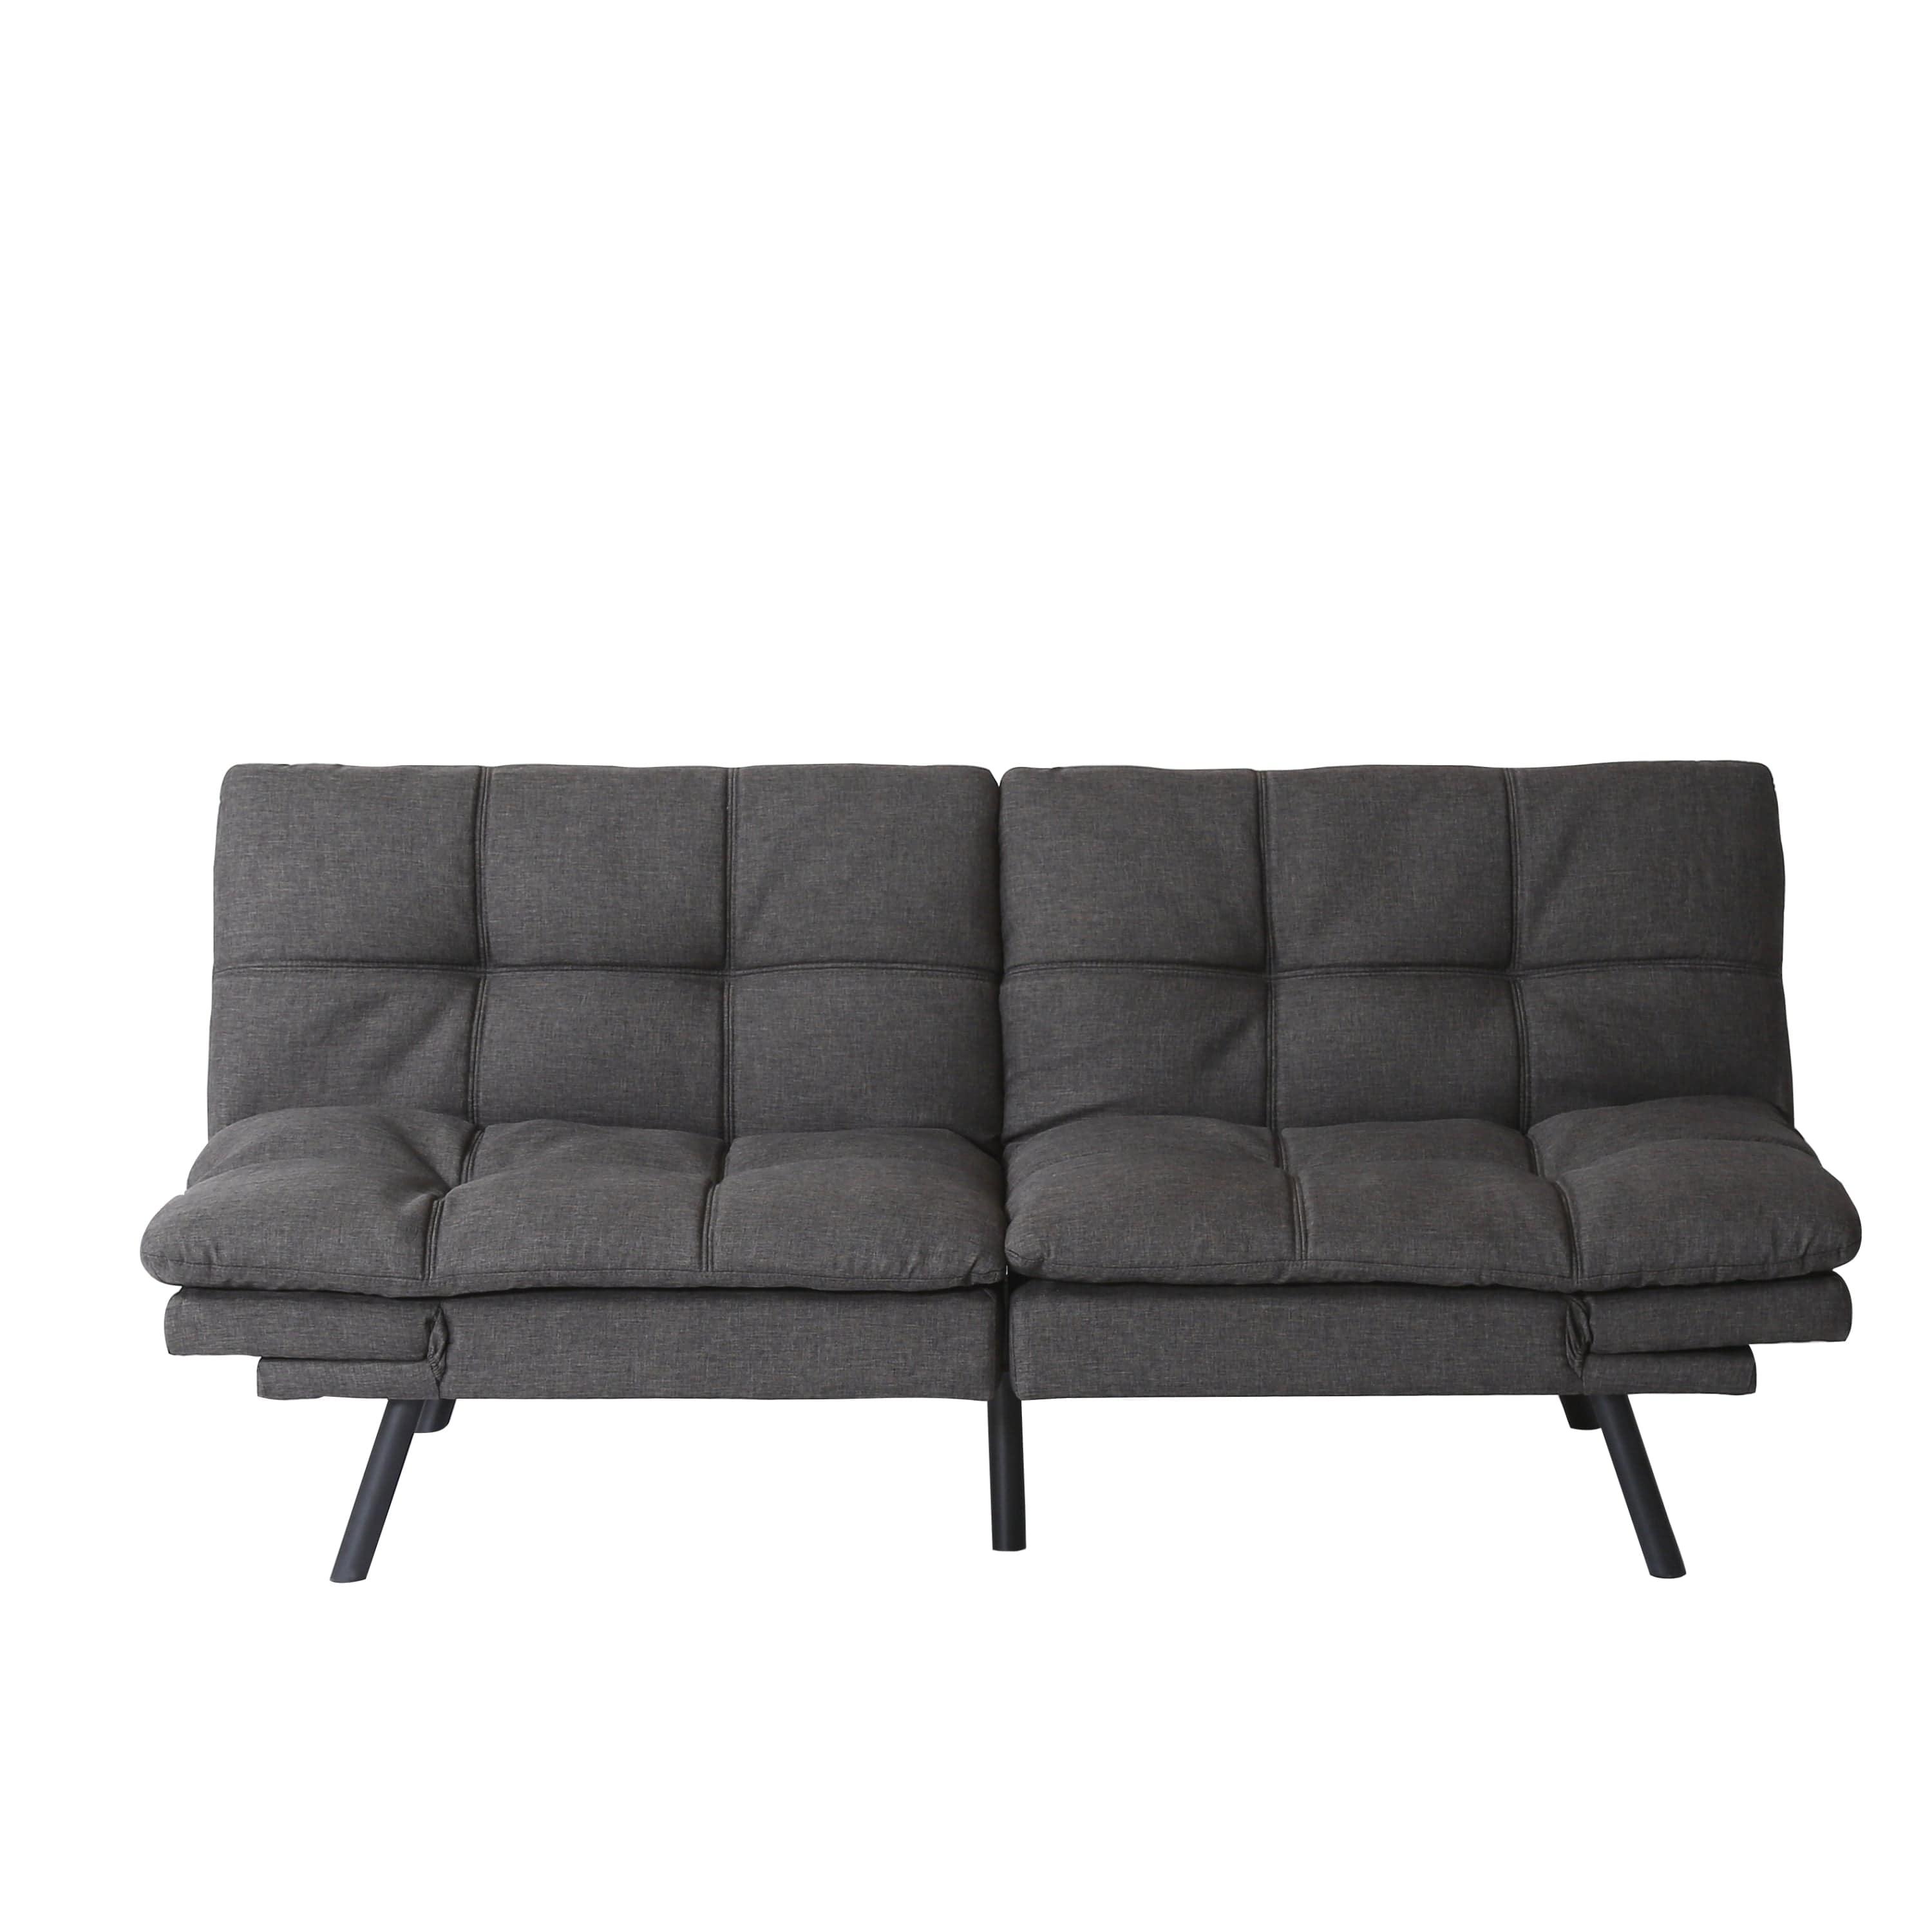 Shop Convertible Memory Foam Futon Couch Bed, Modern Folding Sleeper Sofa-SF267FADGY Mademoiselle Home Decor